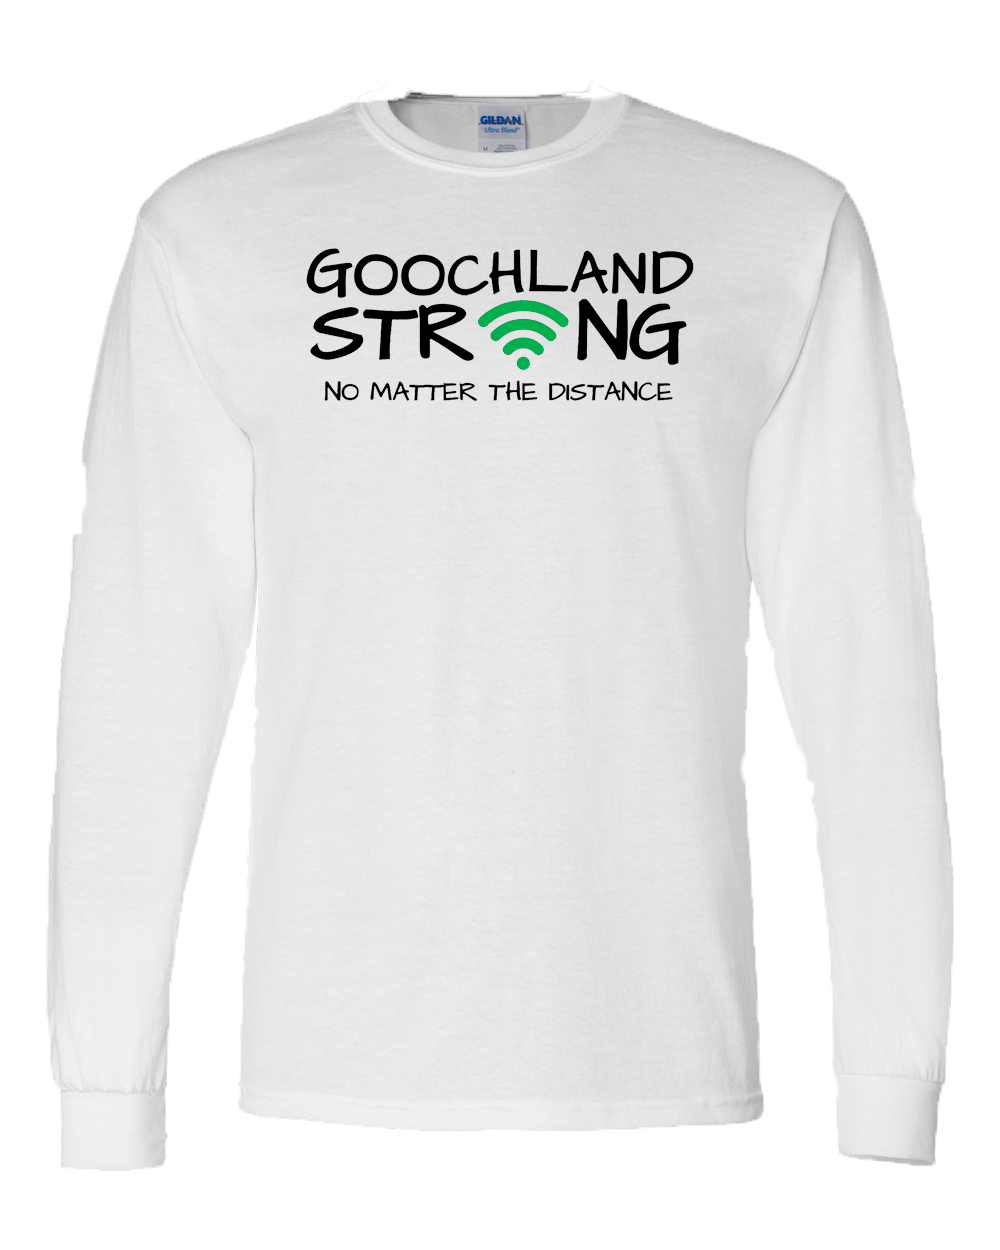 Goochland Strong LongSleeve T - Randolph Elementary